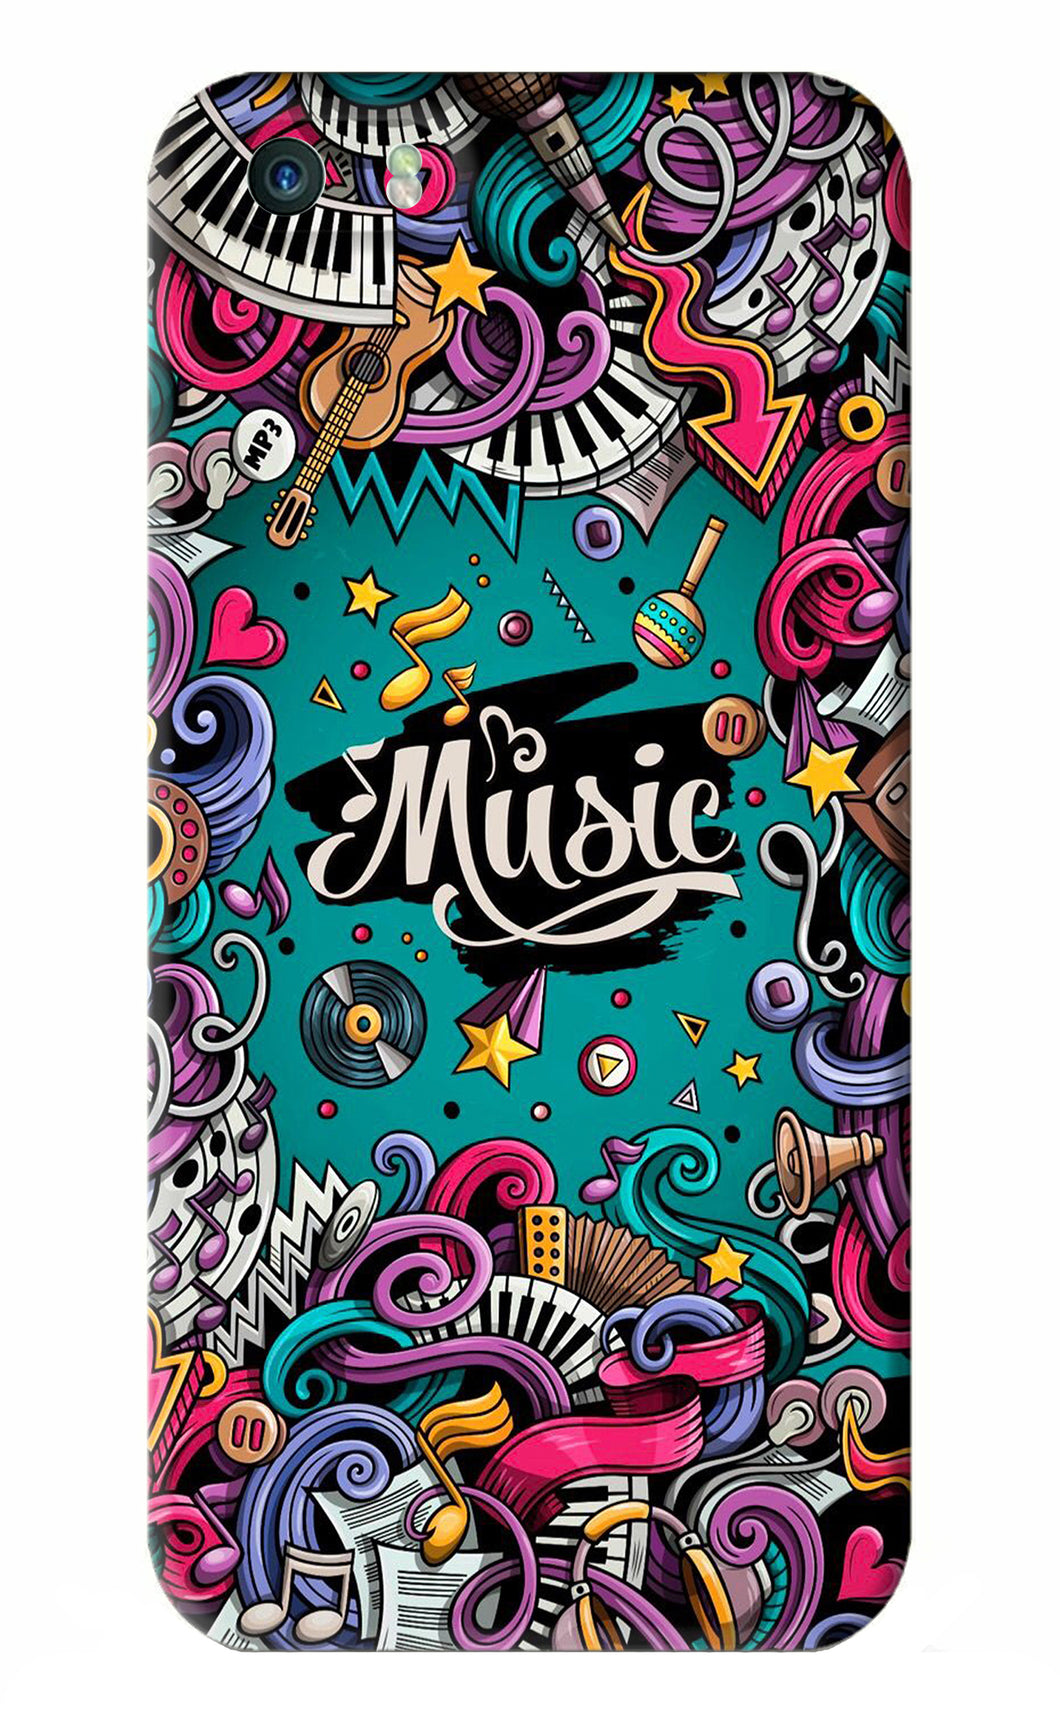 Music Graffiti iPhone 5S Back Skin Wrap